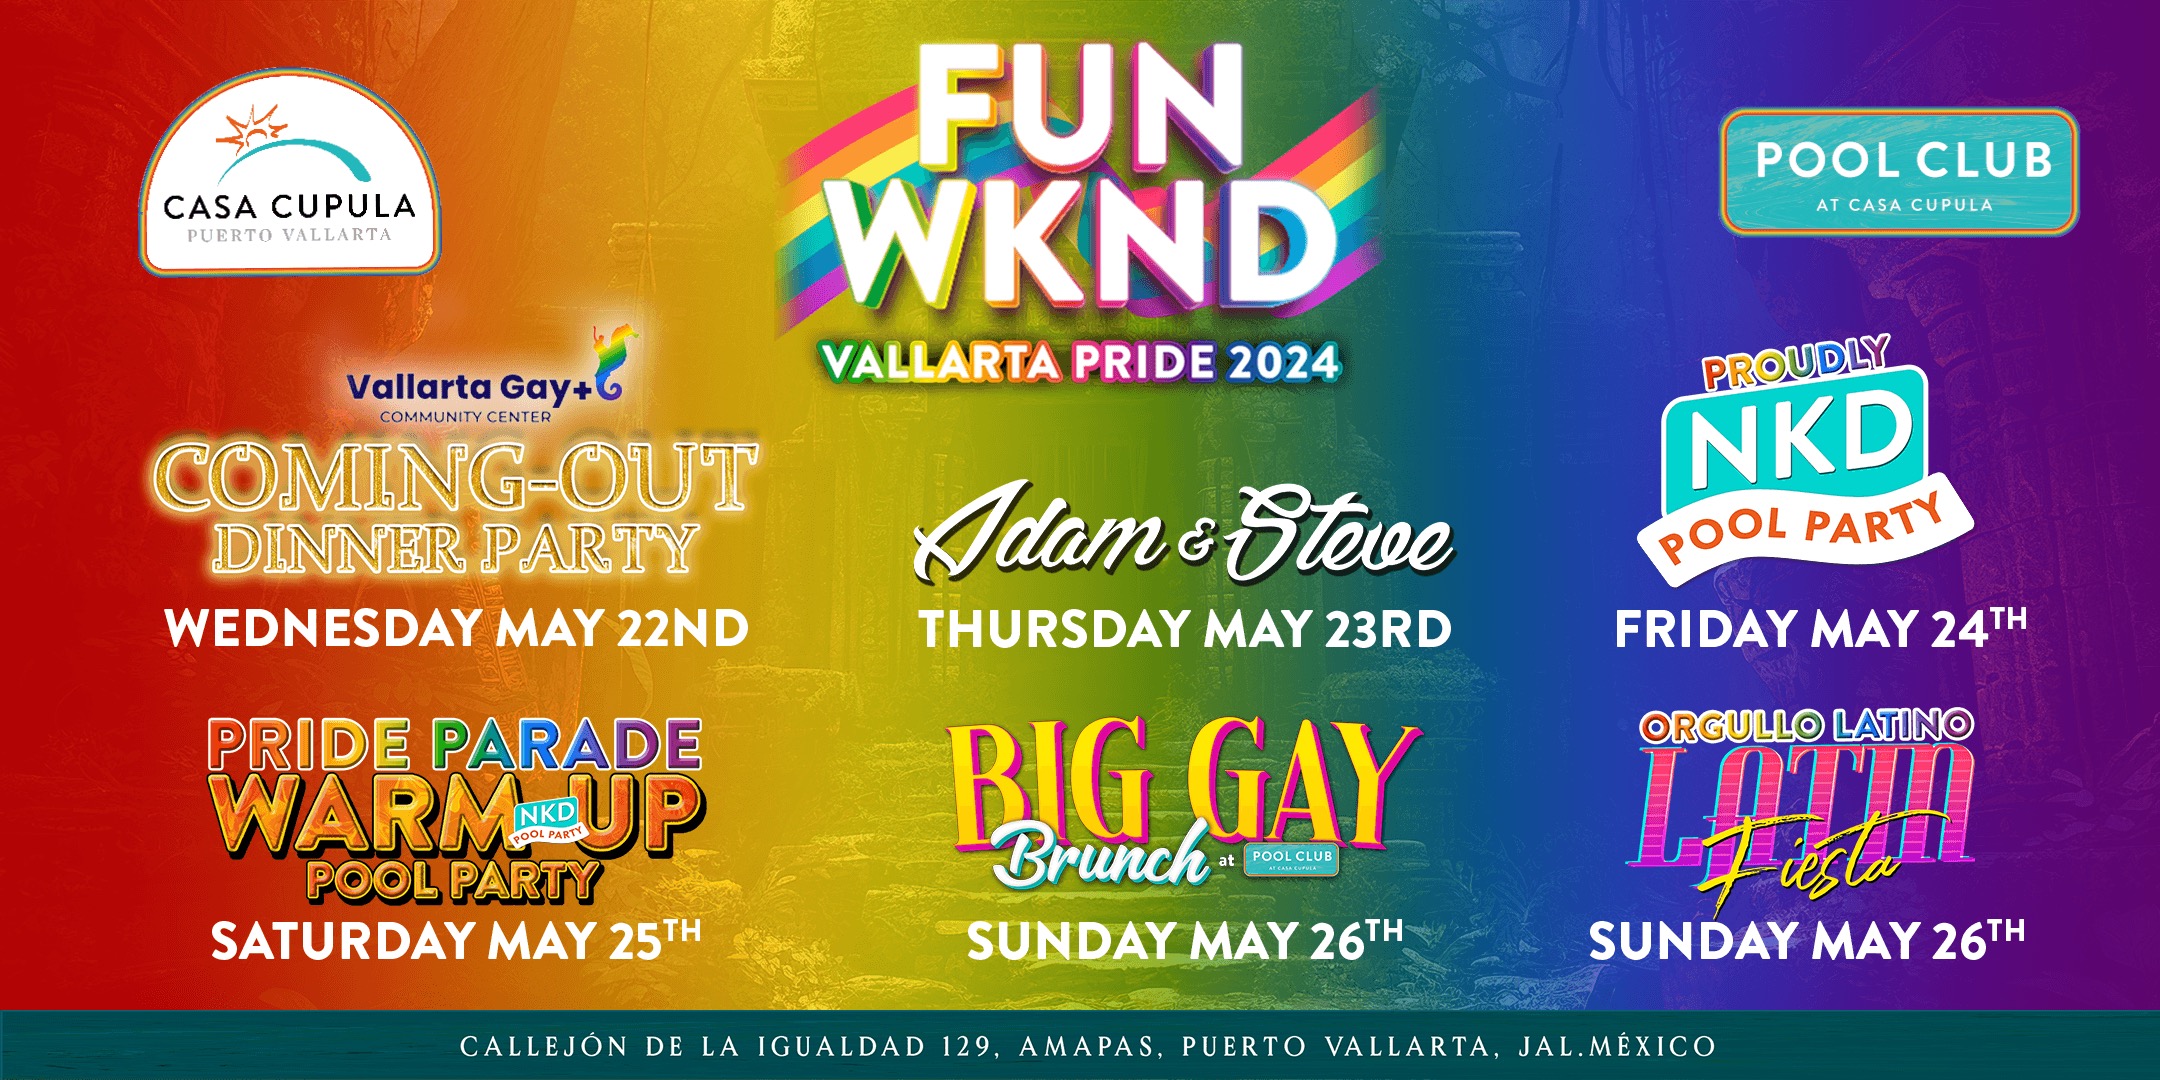 Fun Wknd Vallarta Pride 2024